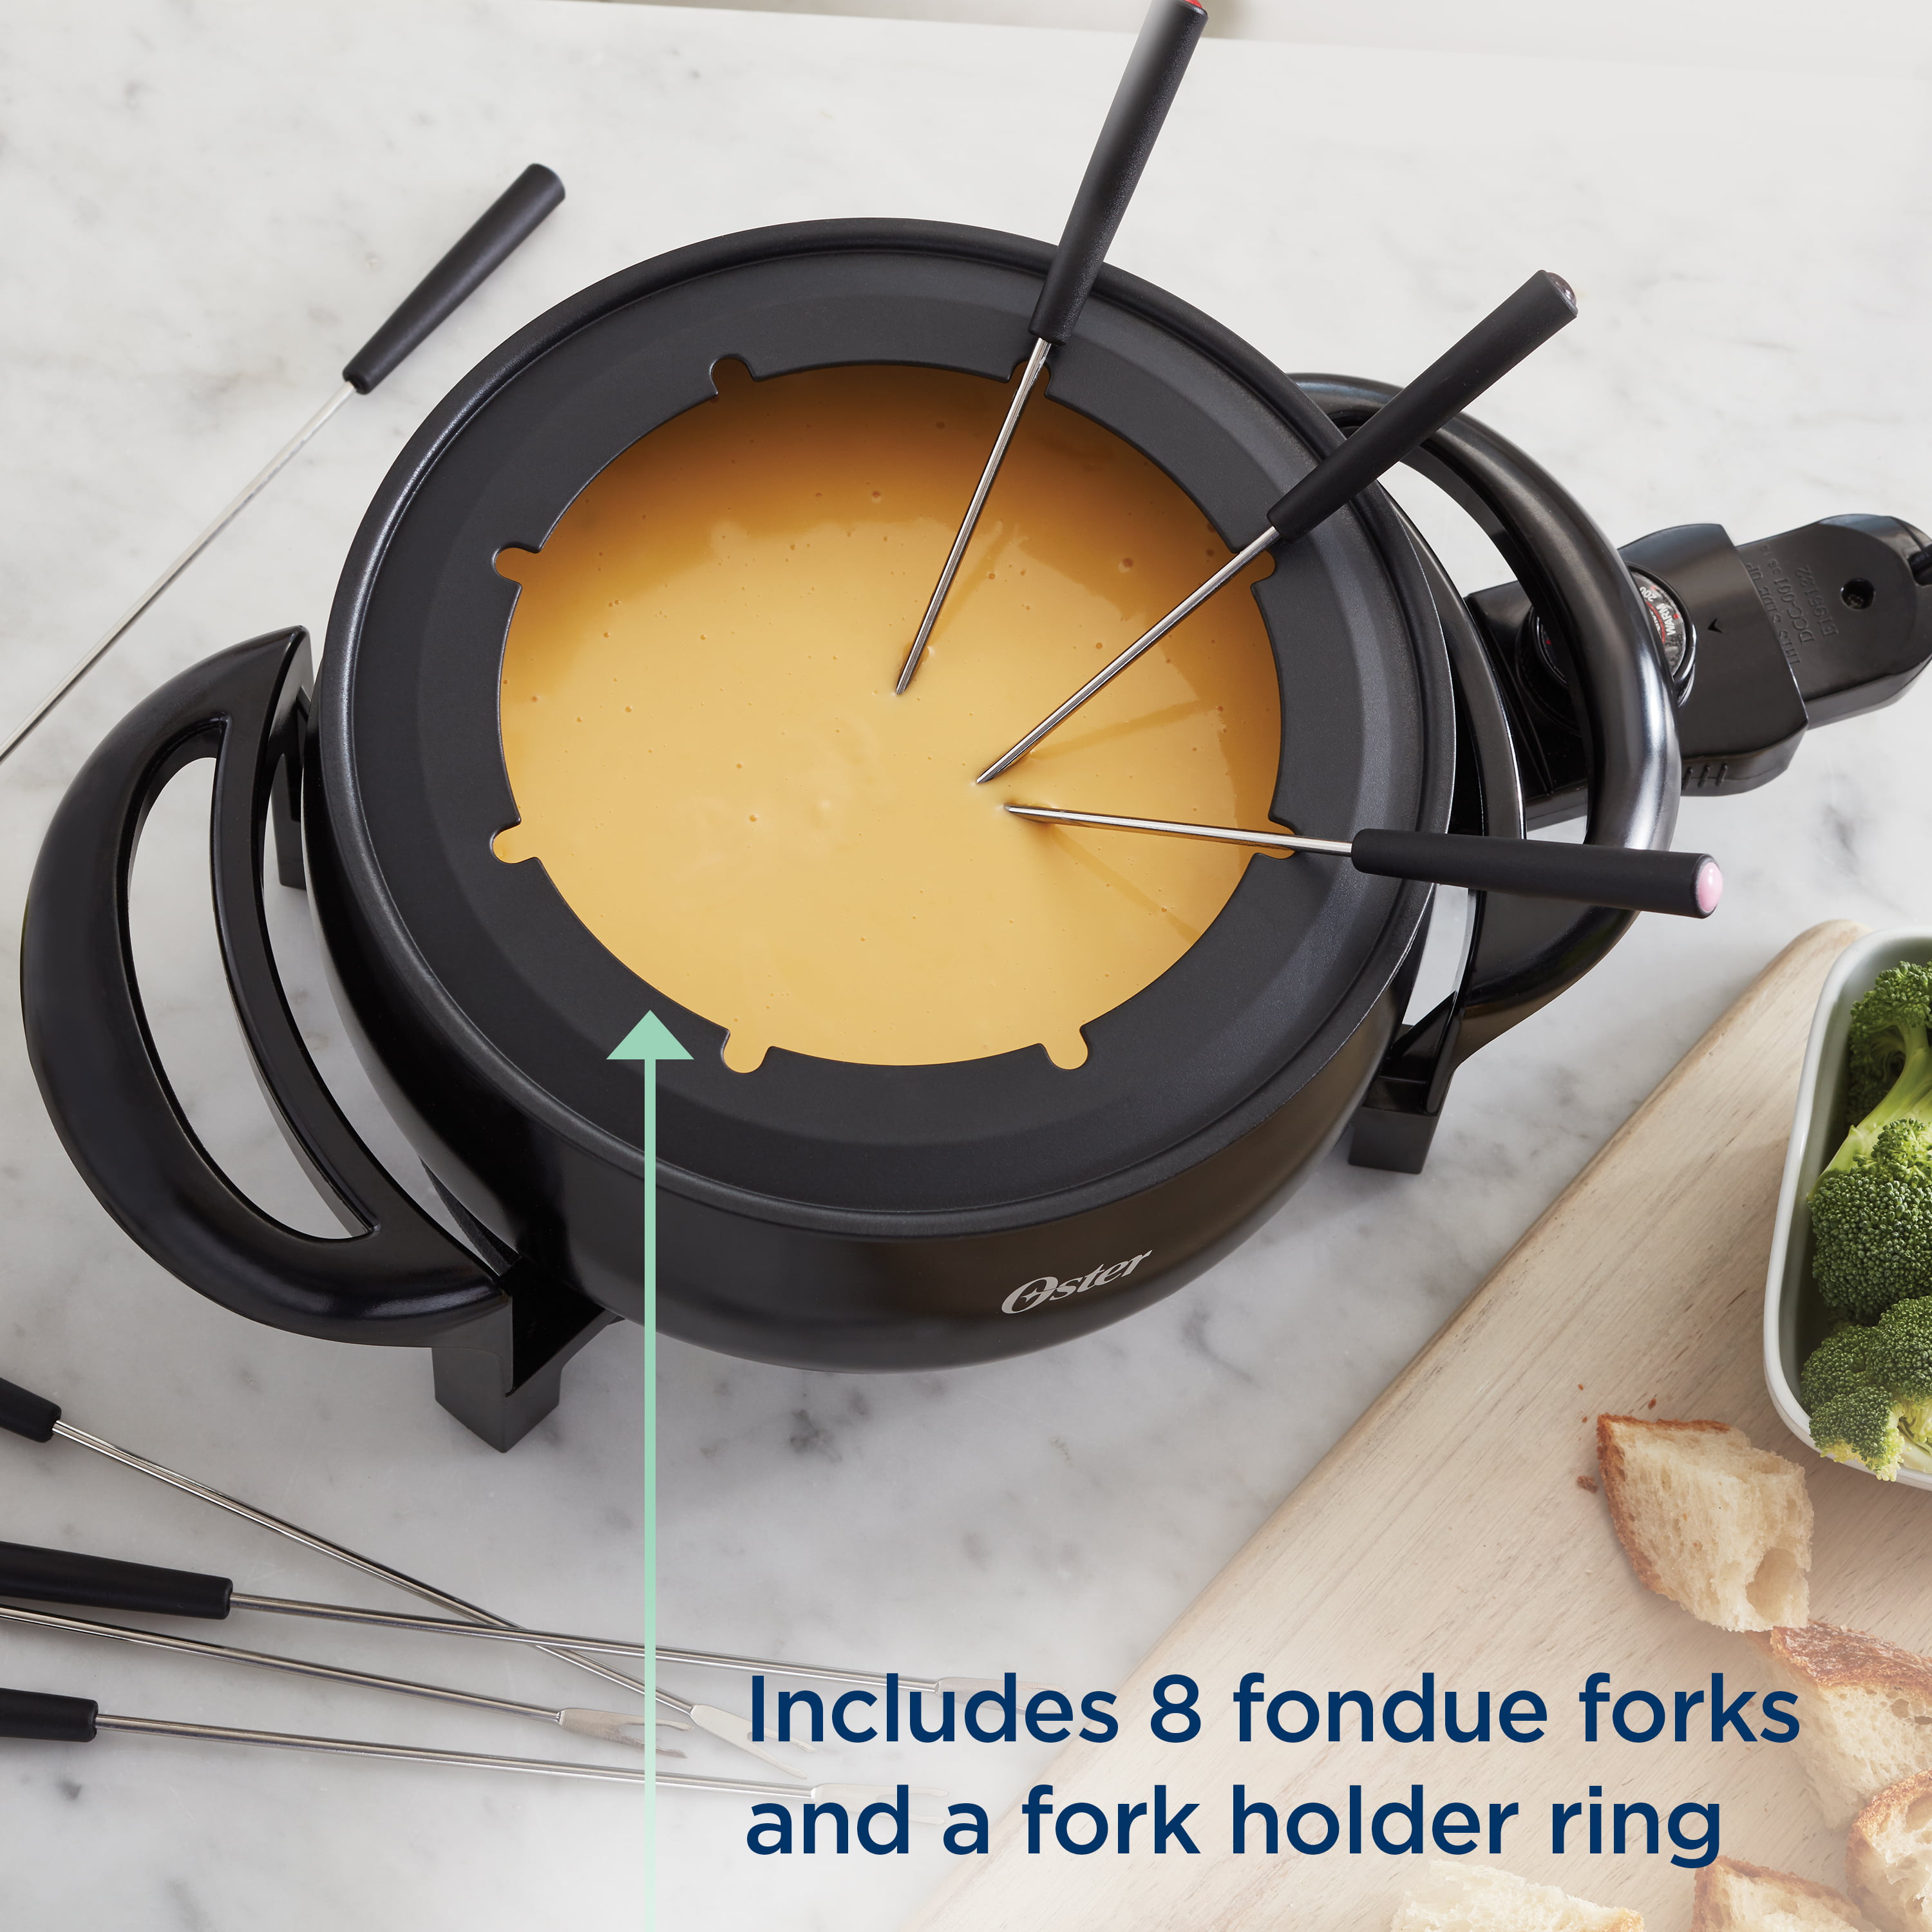 Oster 3 quart electric fondue pot open box